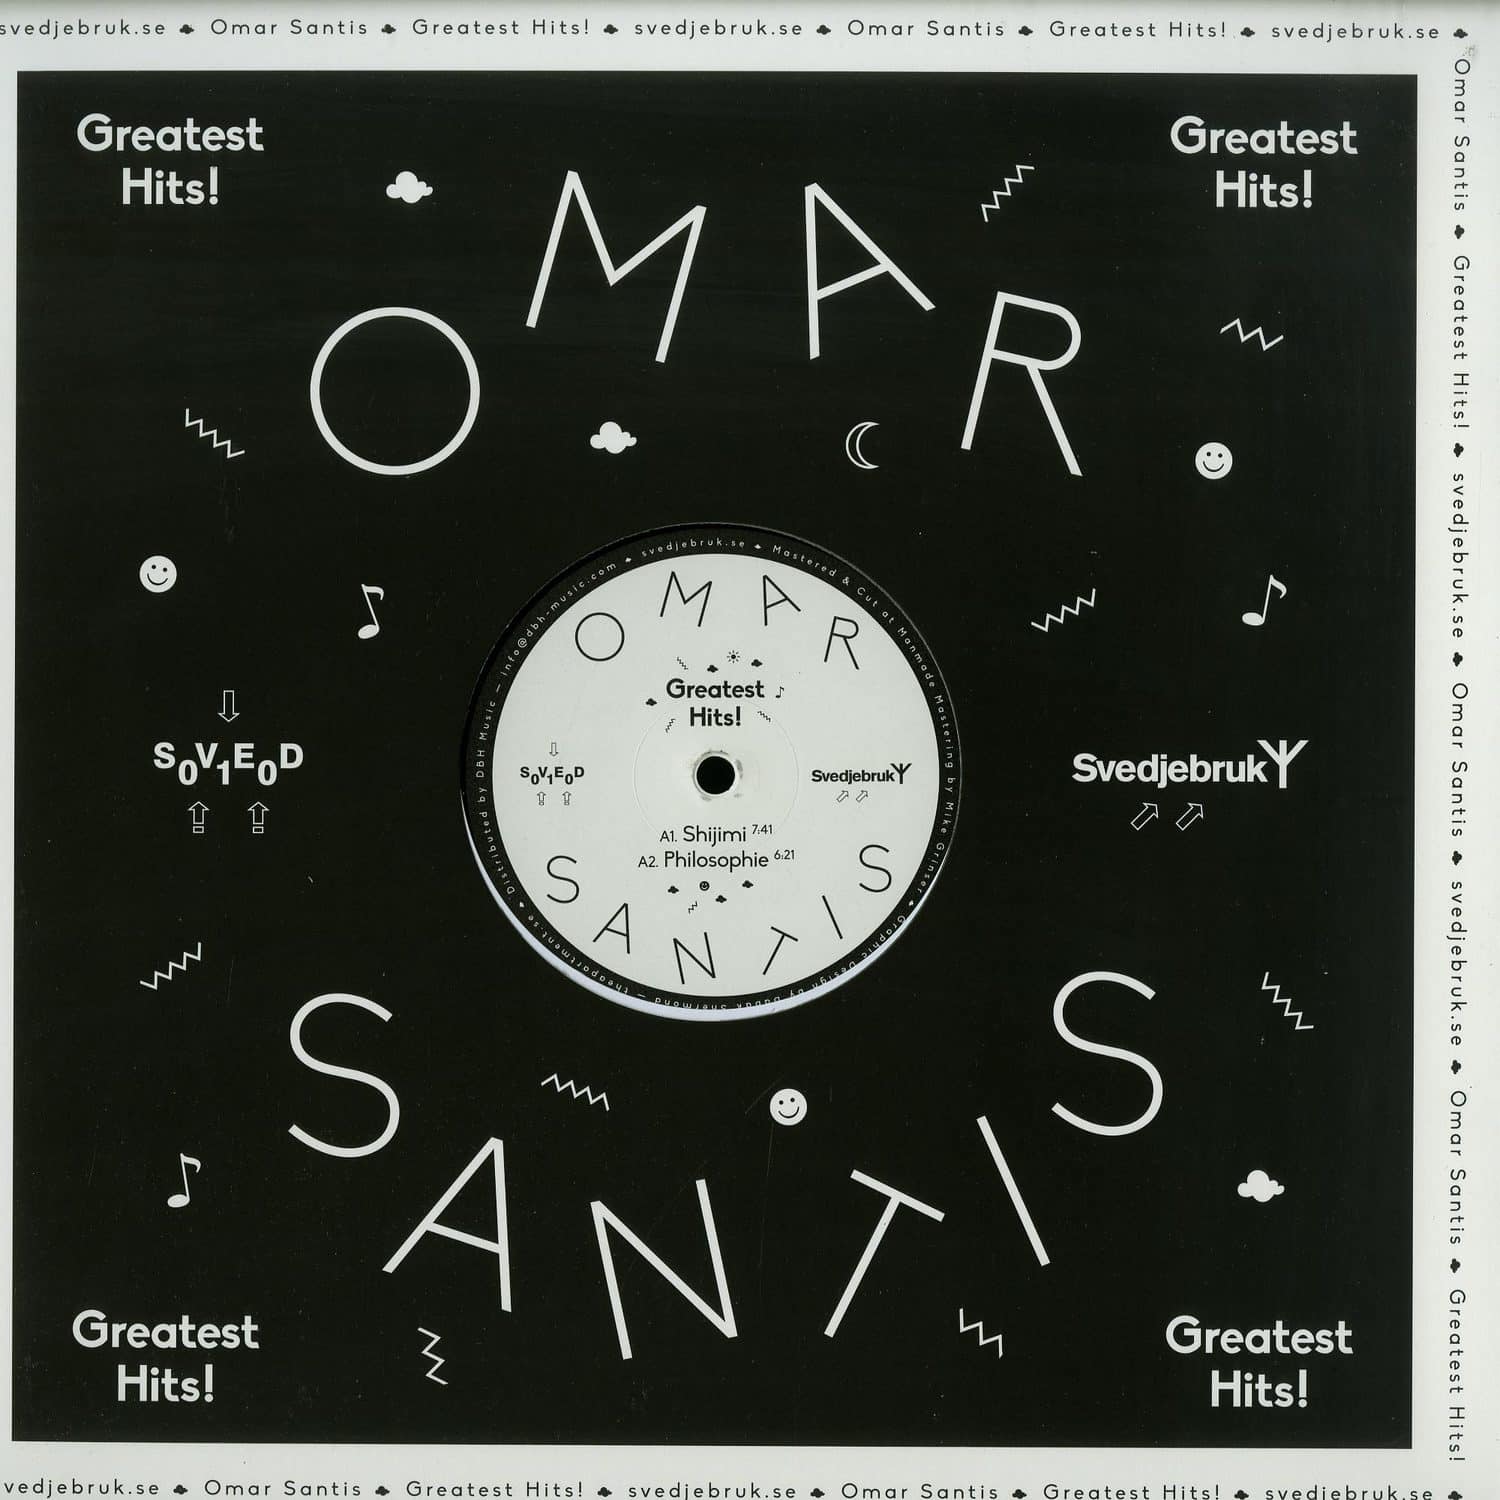 Omar Santis - GREATEST HITS